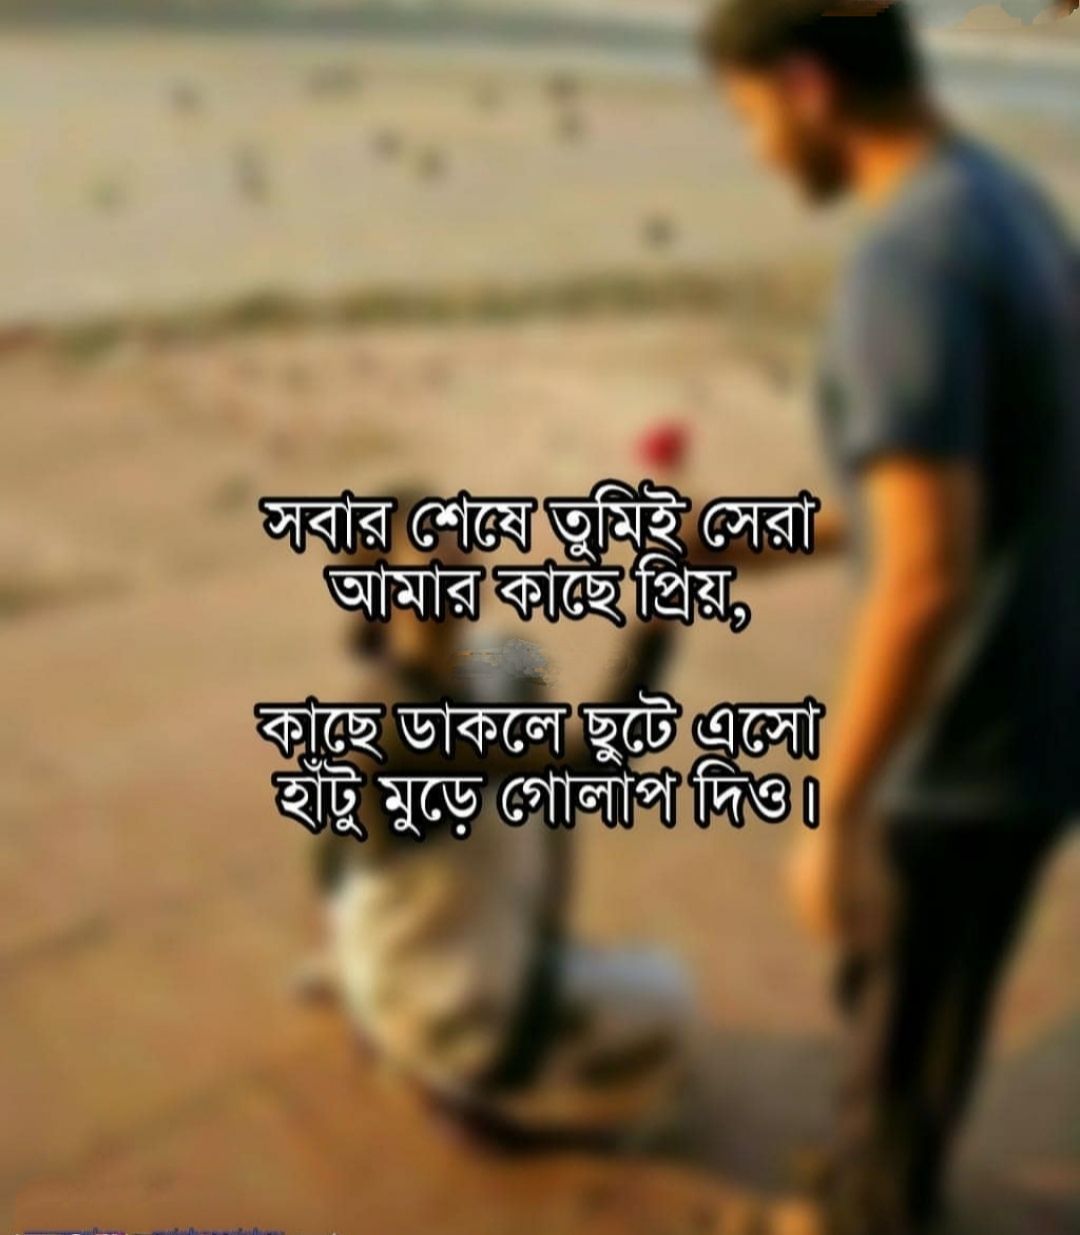 bengali romantic caption for fb dp